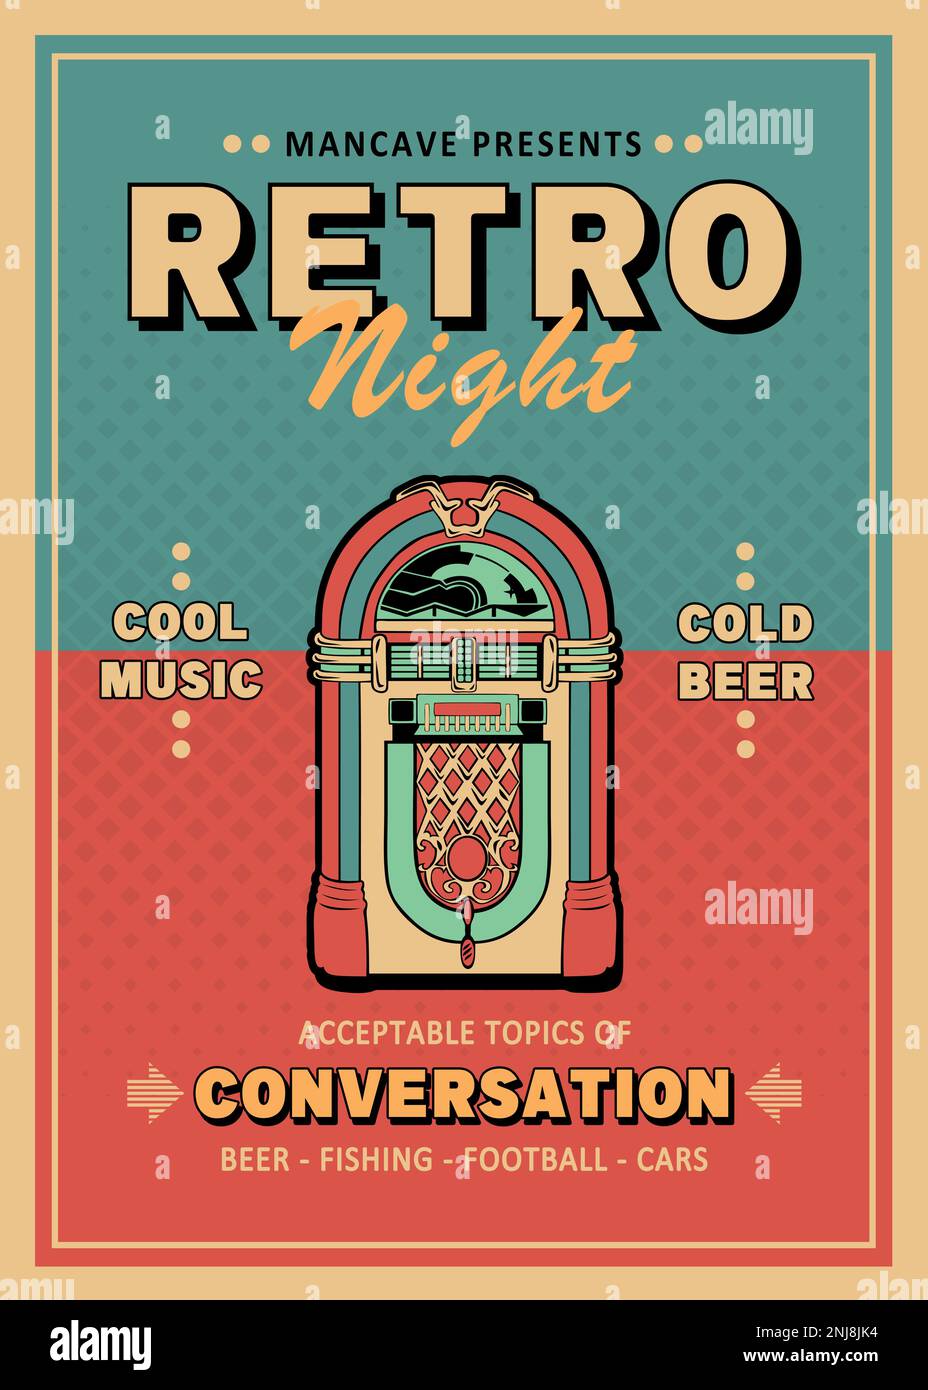 Mancave Presents - Retro Night - Men's Vintage Poster Art Stock Photo